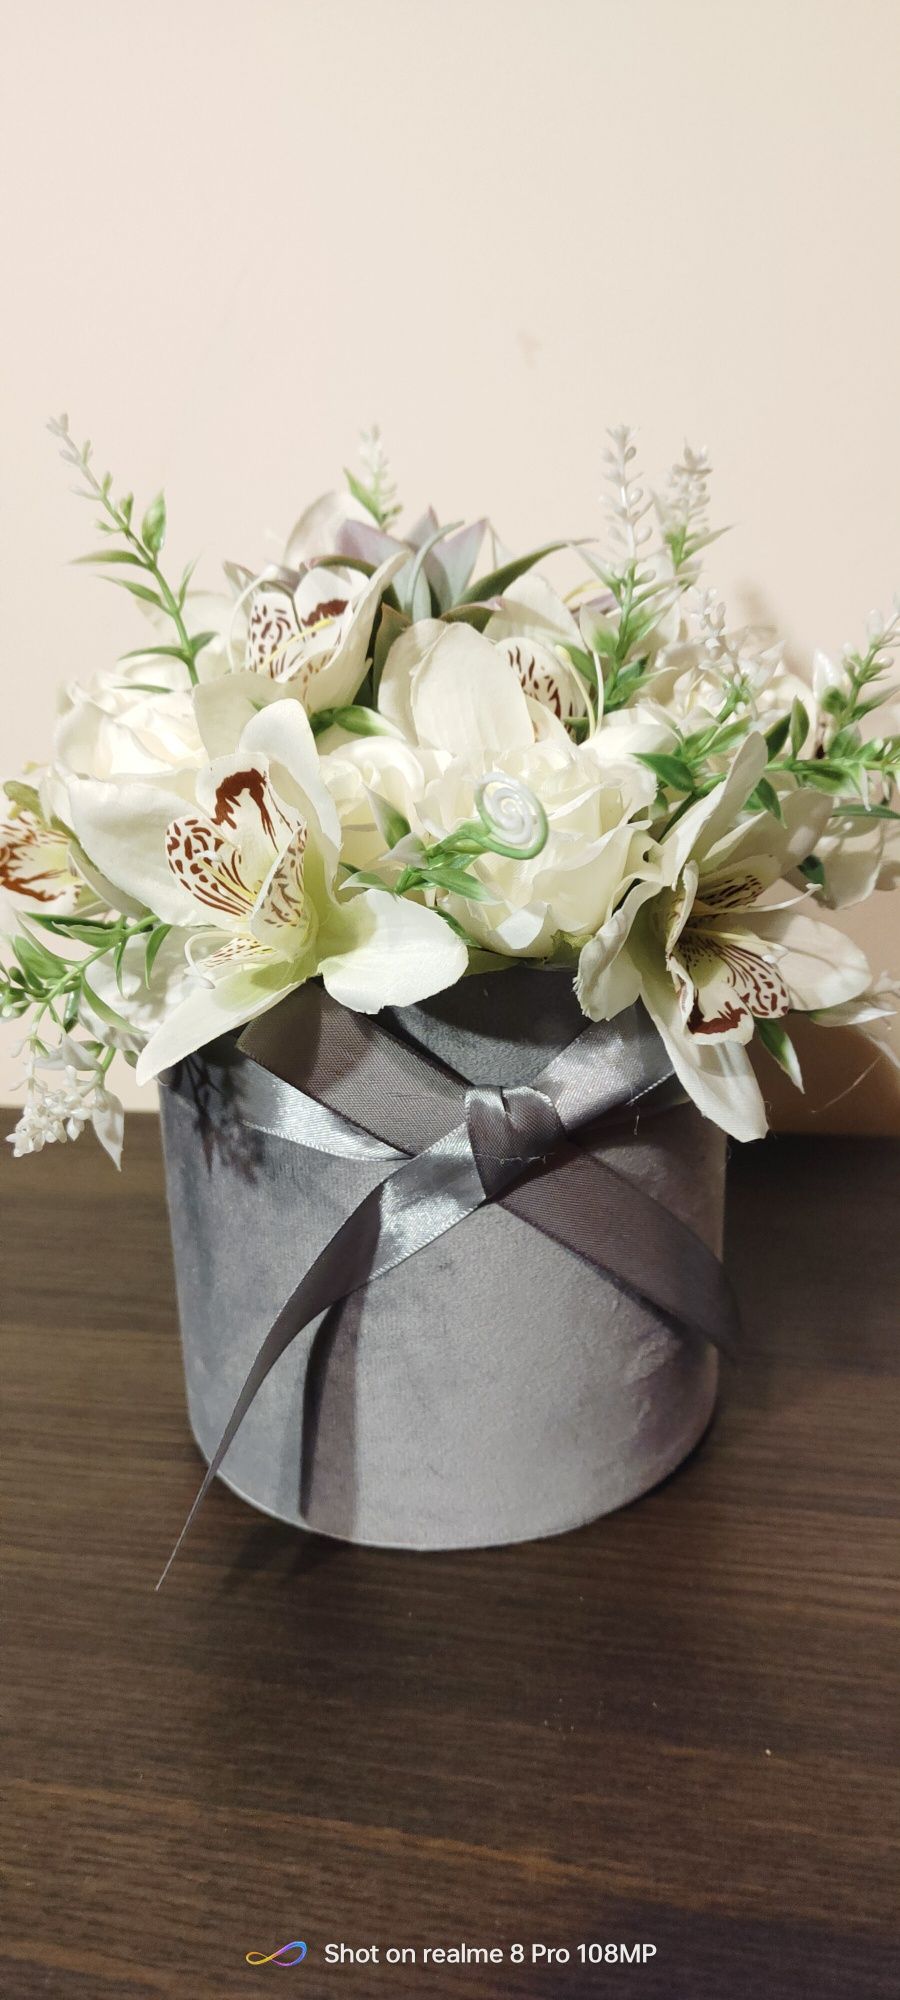 Flower box handmade